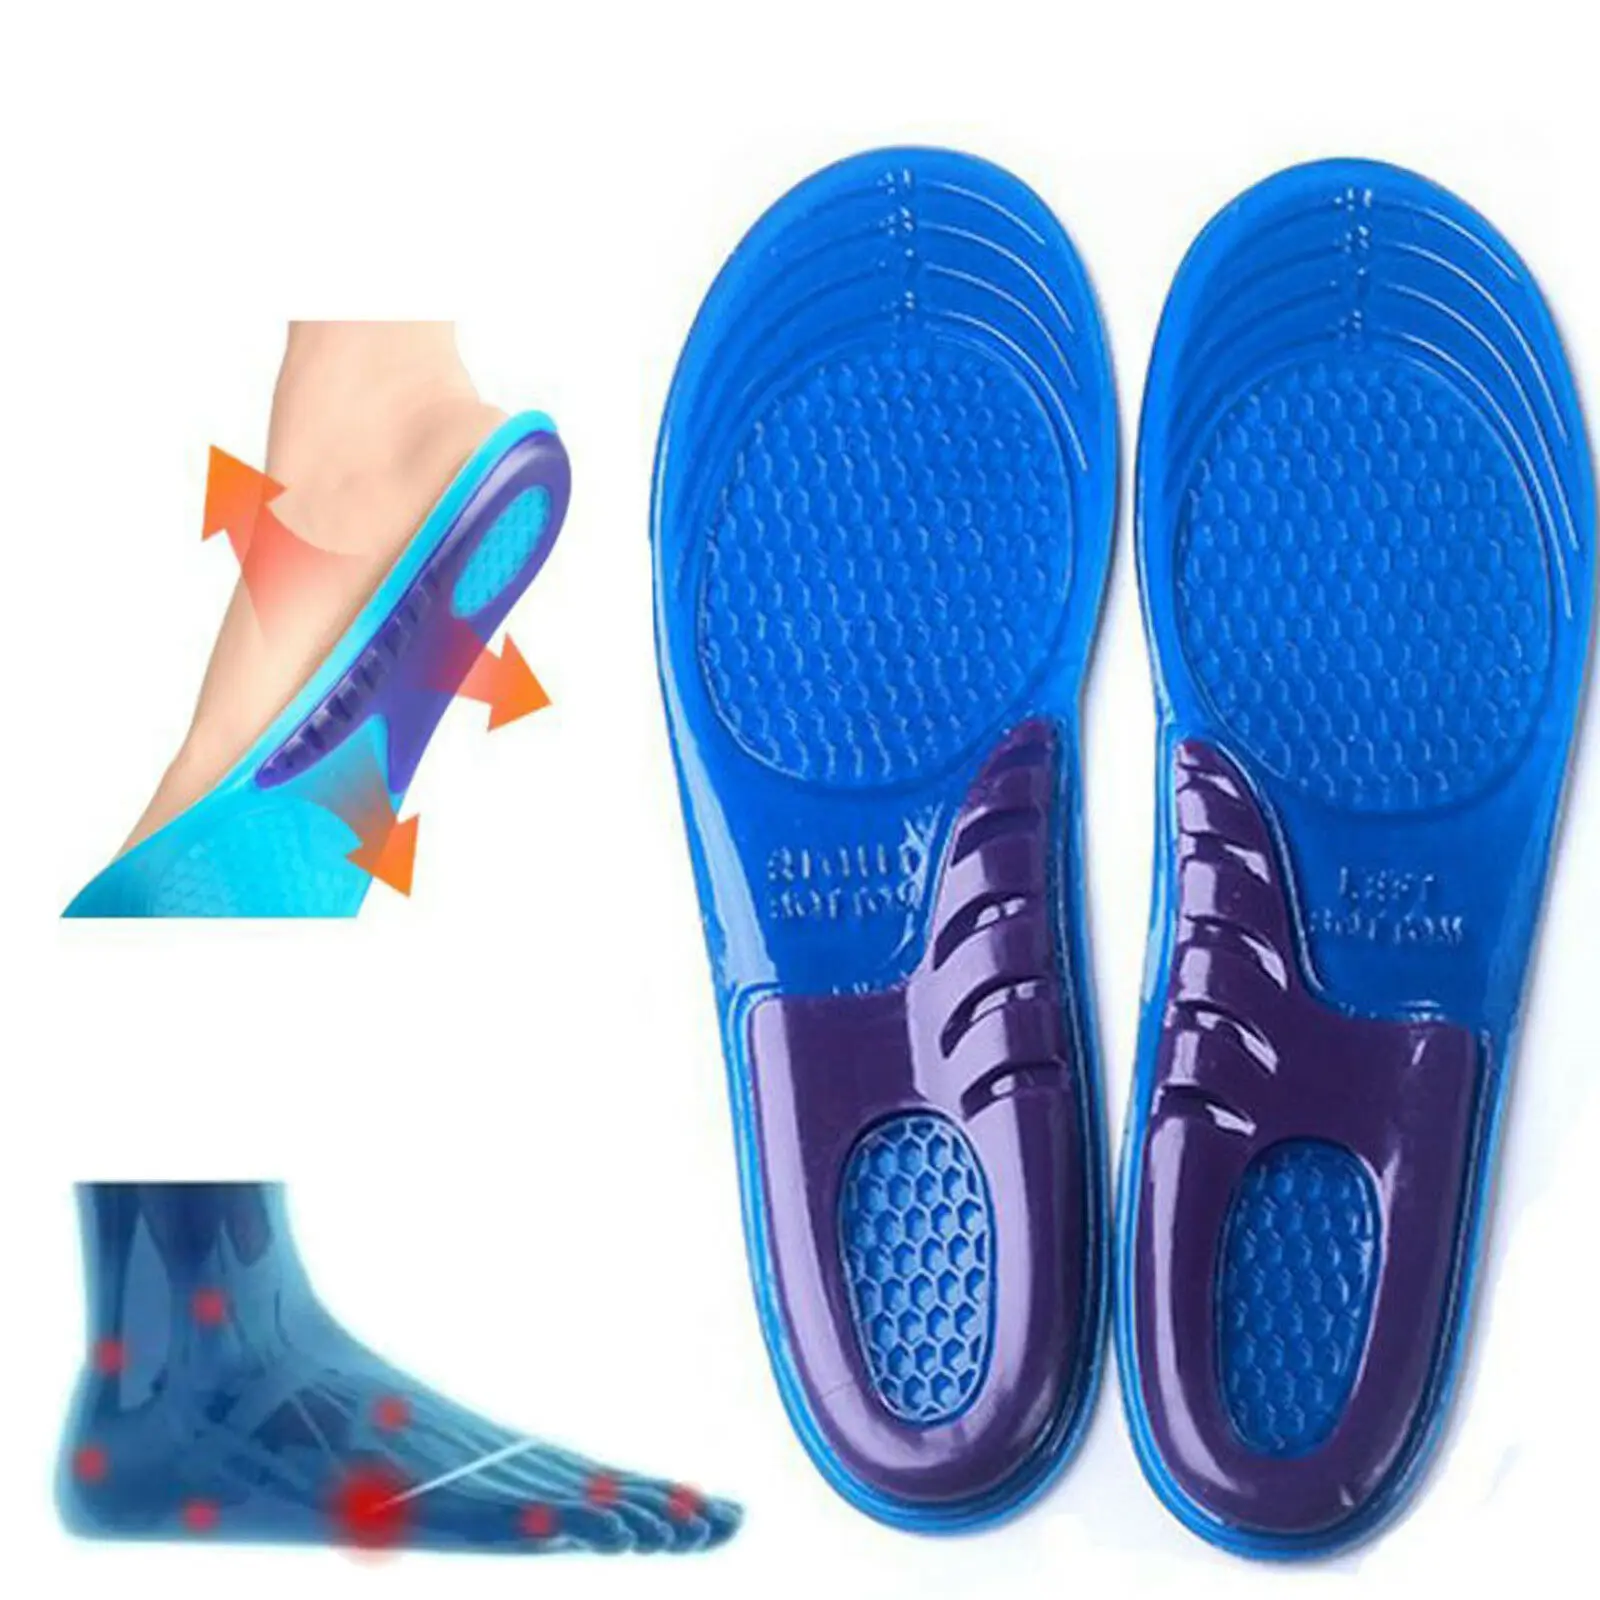 

Hadiyah Factory Gel Shoe insole Amazon eBay Hot Sale Foot Heel Care Non-Slip Running Sports Shock Absorption insole Pad